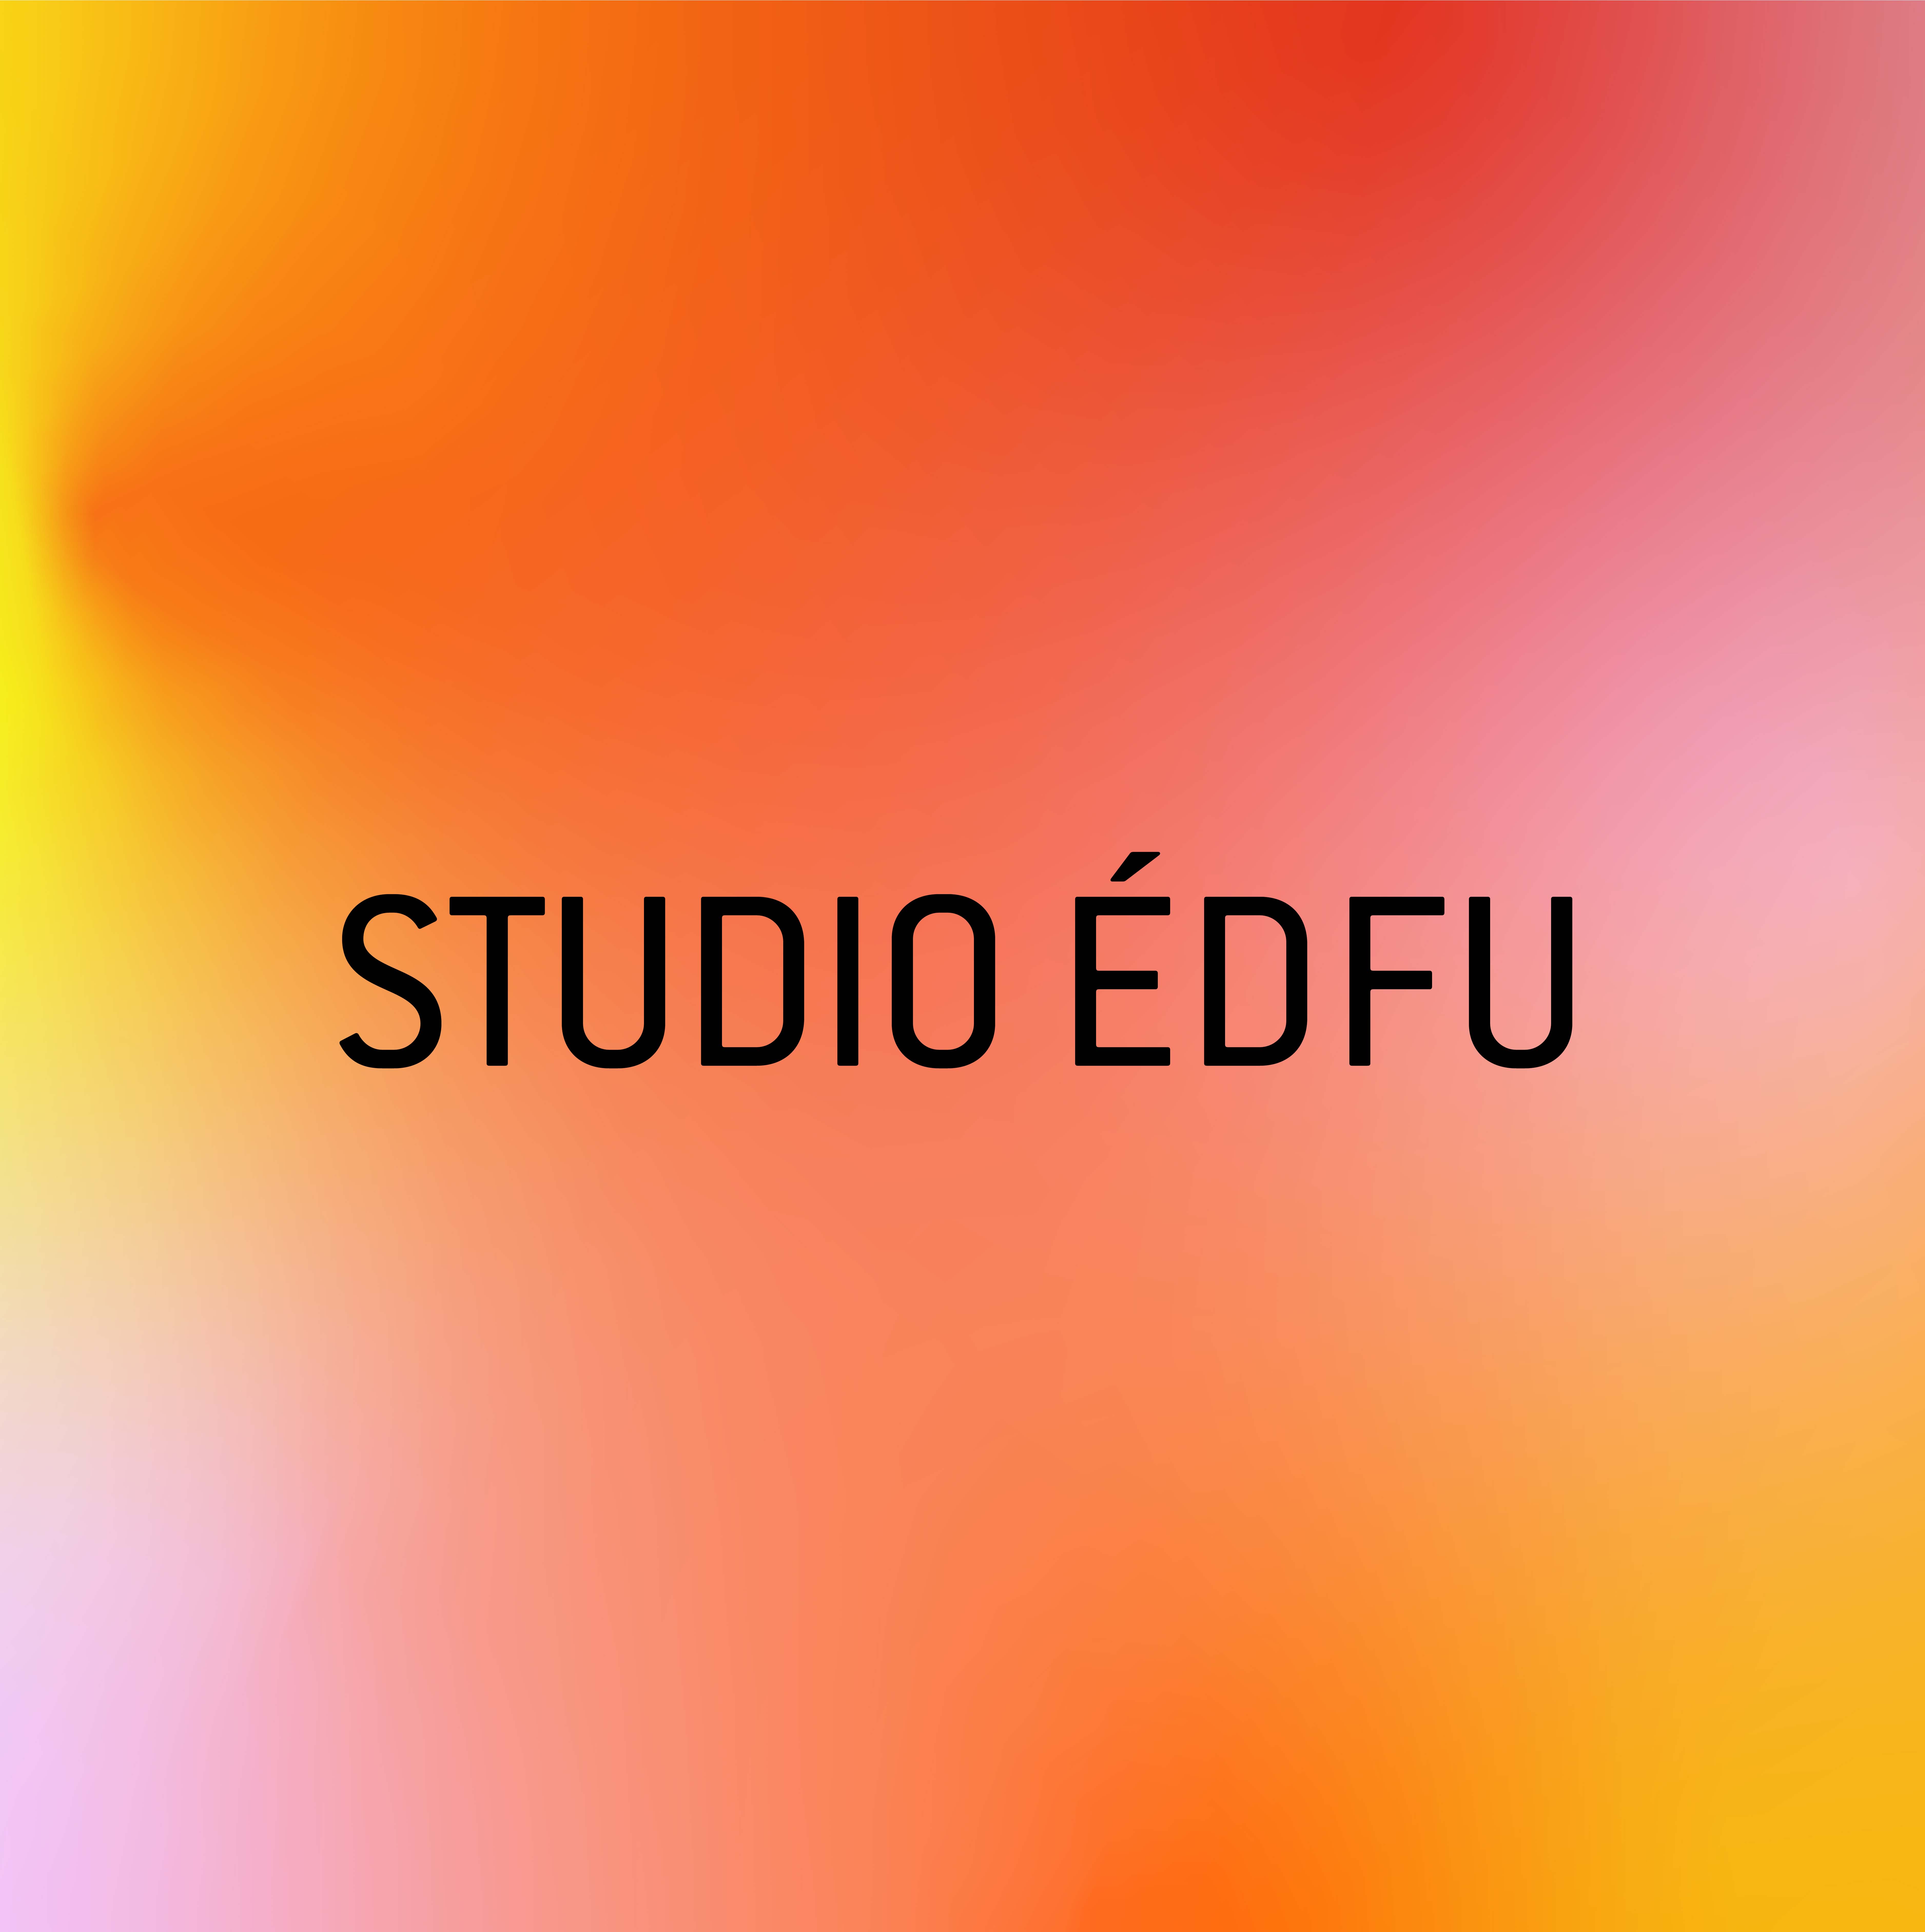 Brand Identity and Packaging Design for Studio Edfu